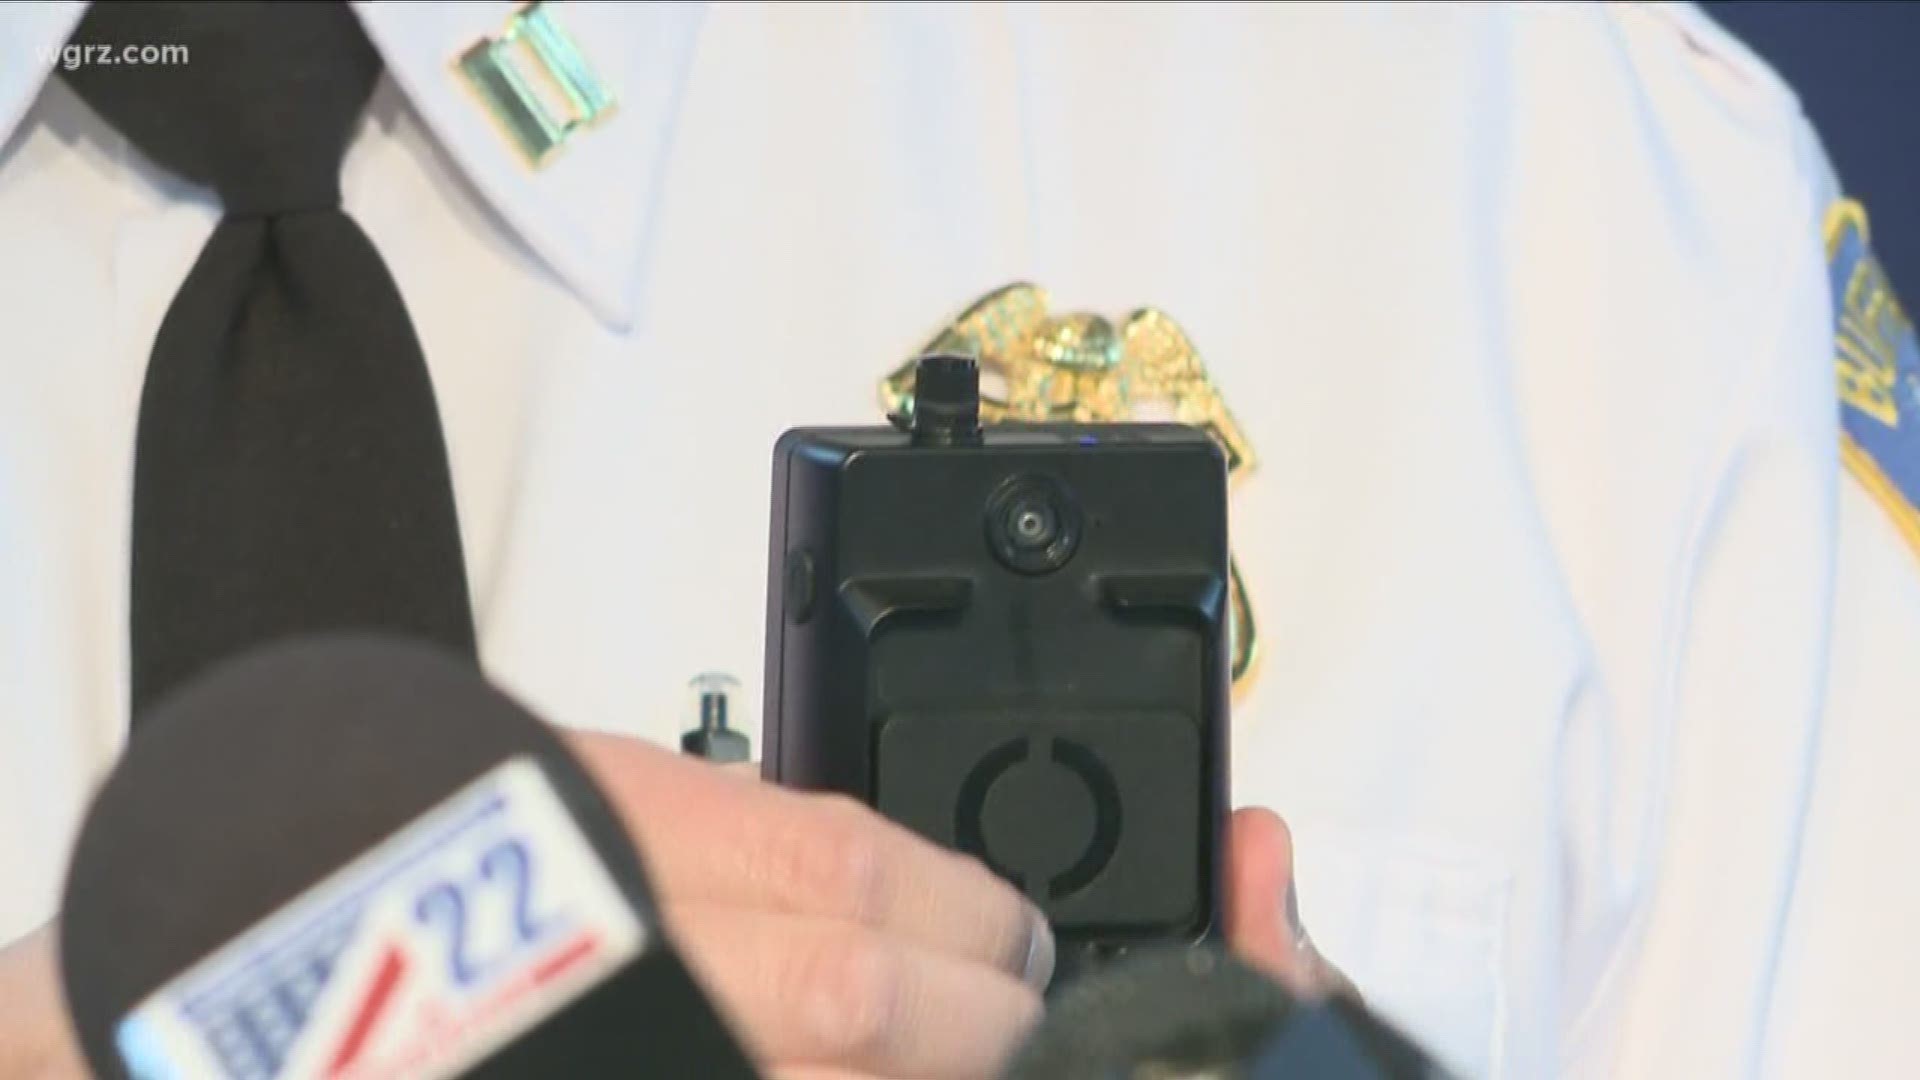 Should Buffalo Police Officers Wear Body Cams